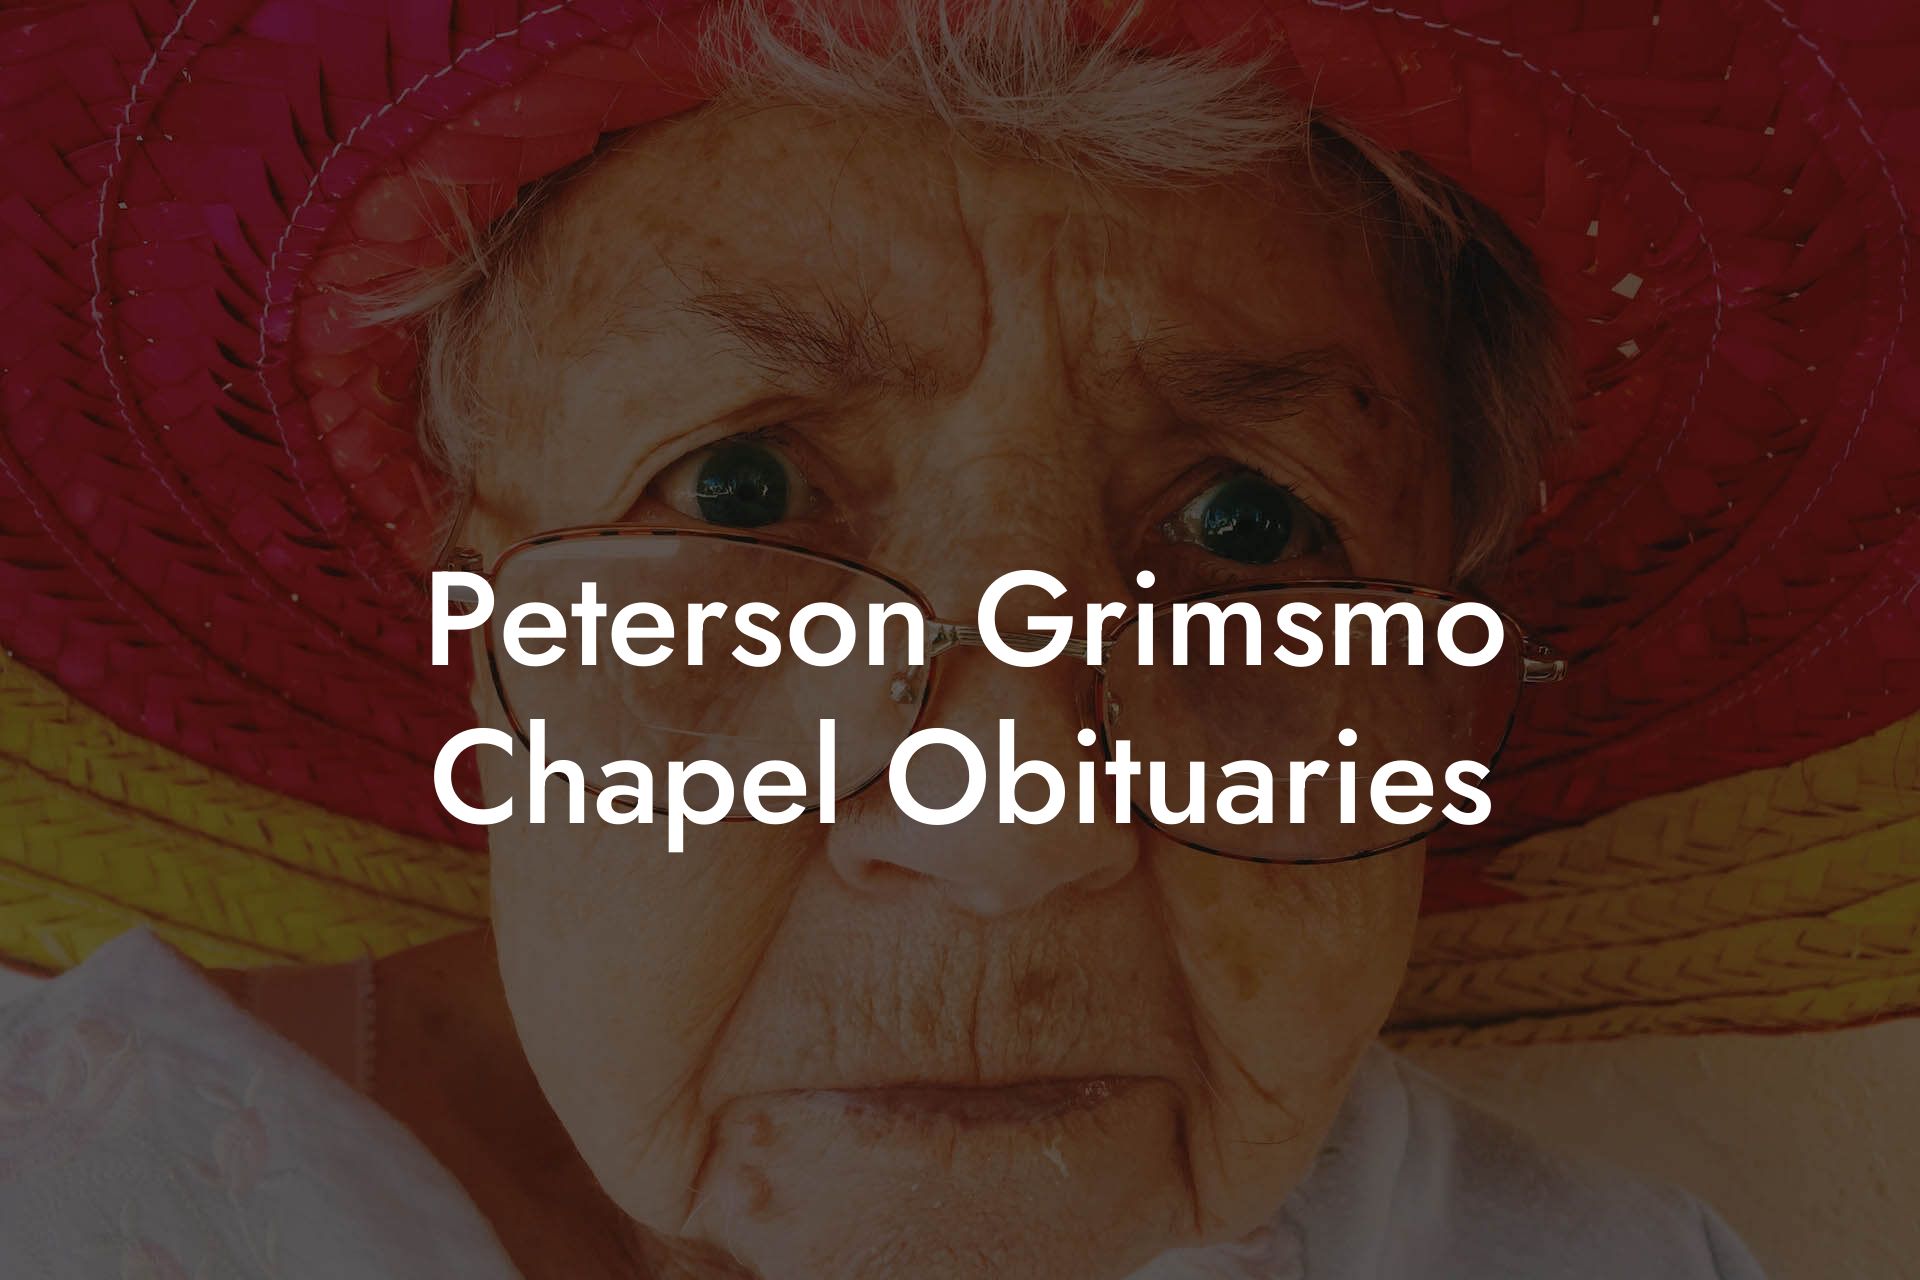 Peterson Grimsmo Chapel Obituaries